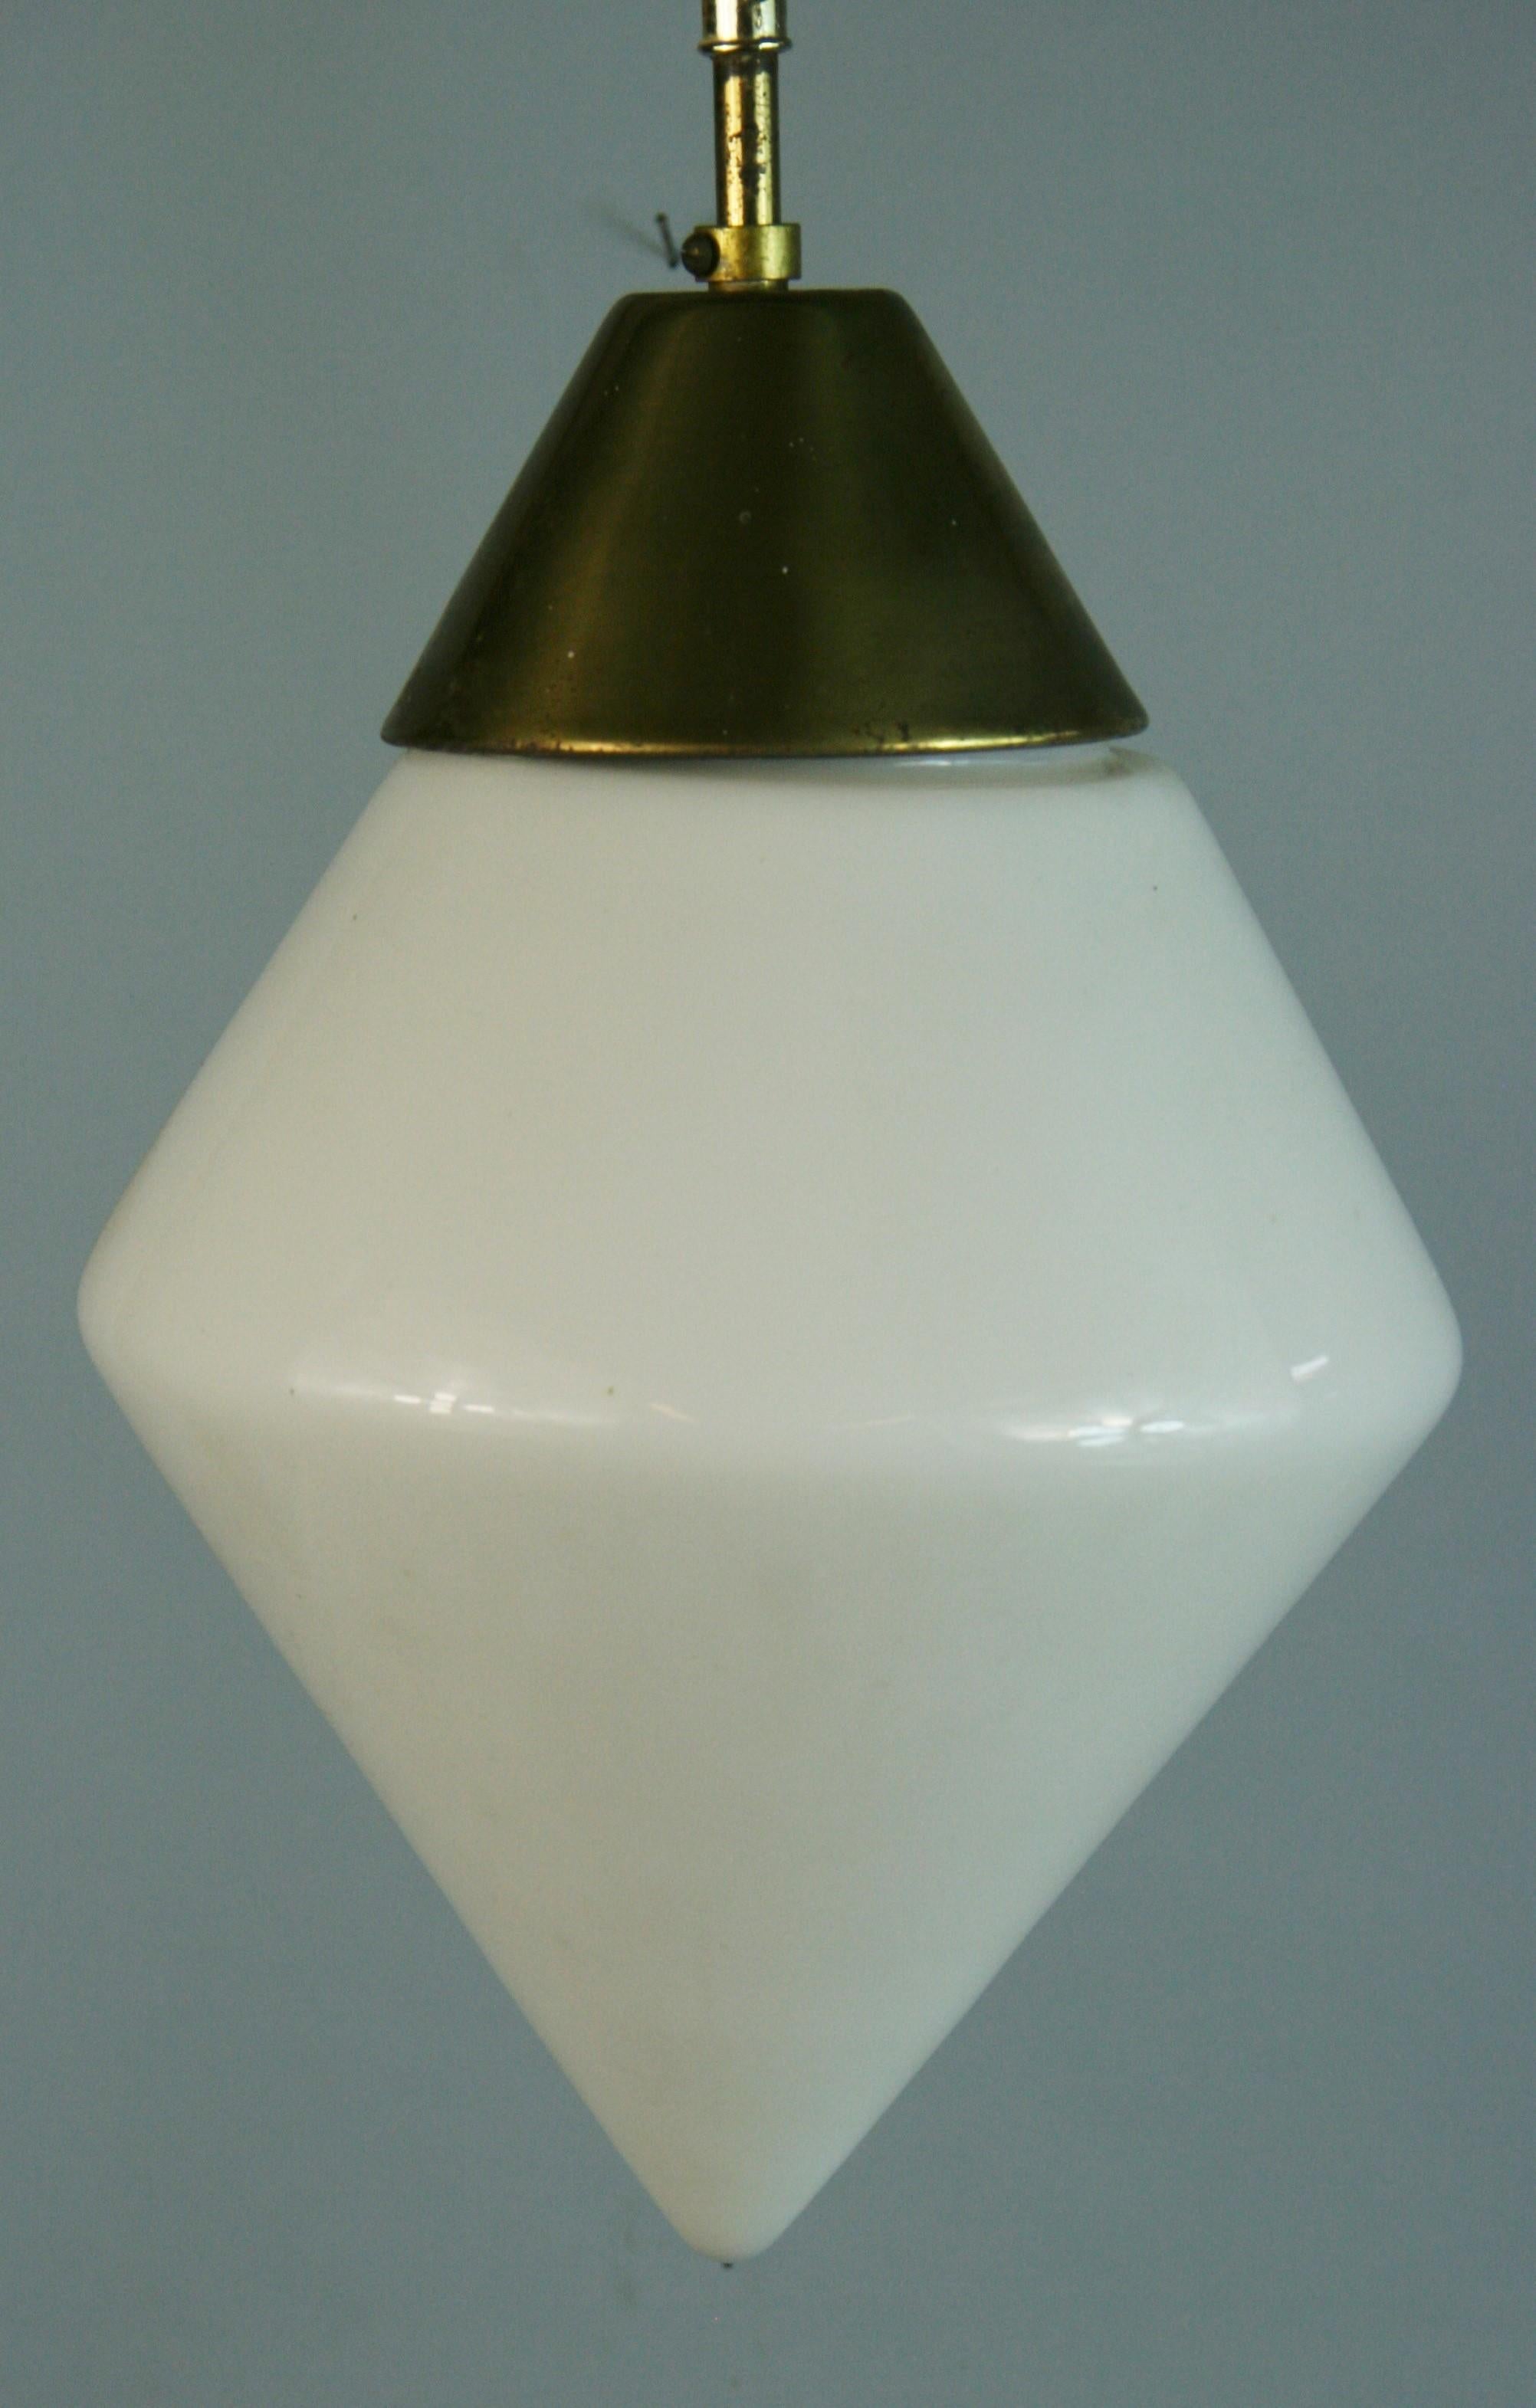 1616 a milk glass / brass hardware single light pendant.
2 available 
Price individually.
    